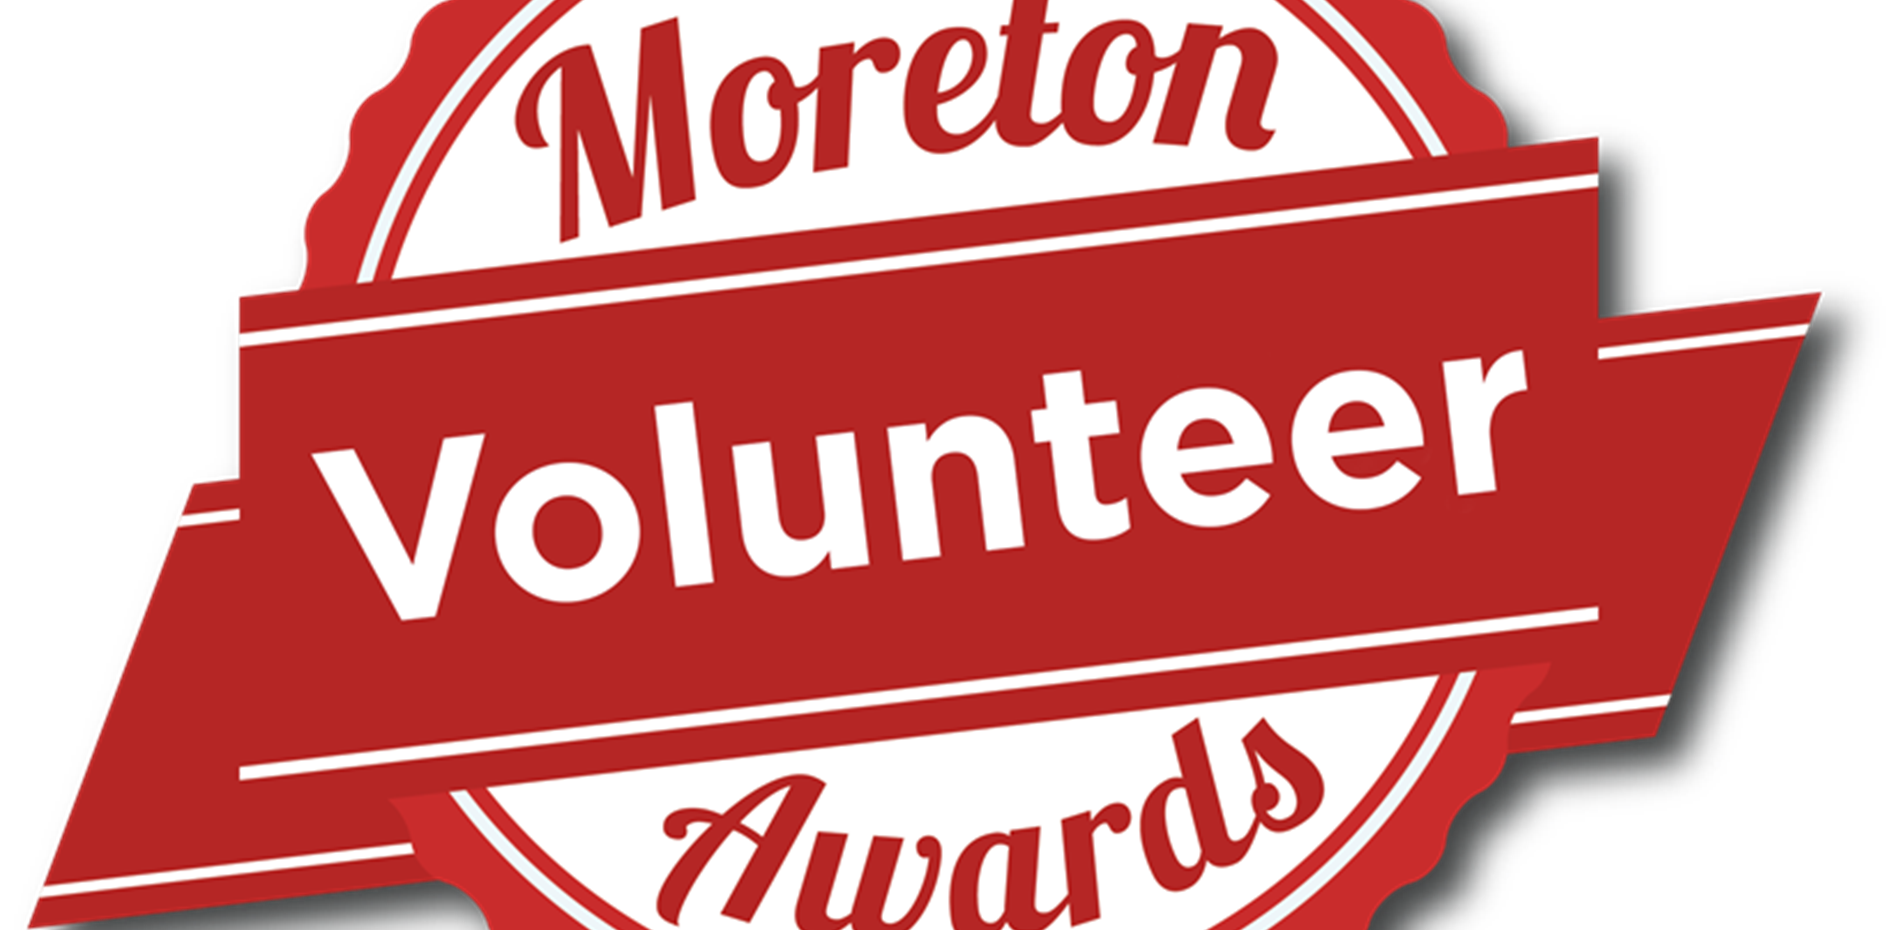 Moreton Volunteer Award Winners 2022 Main Image